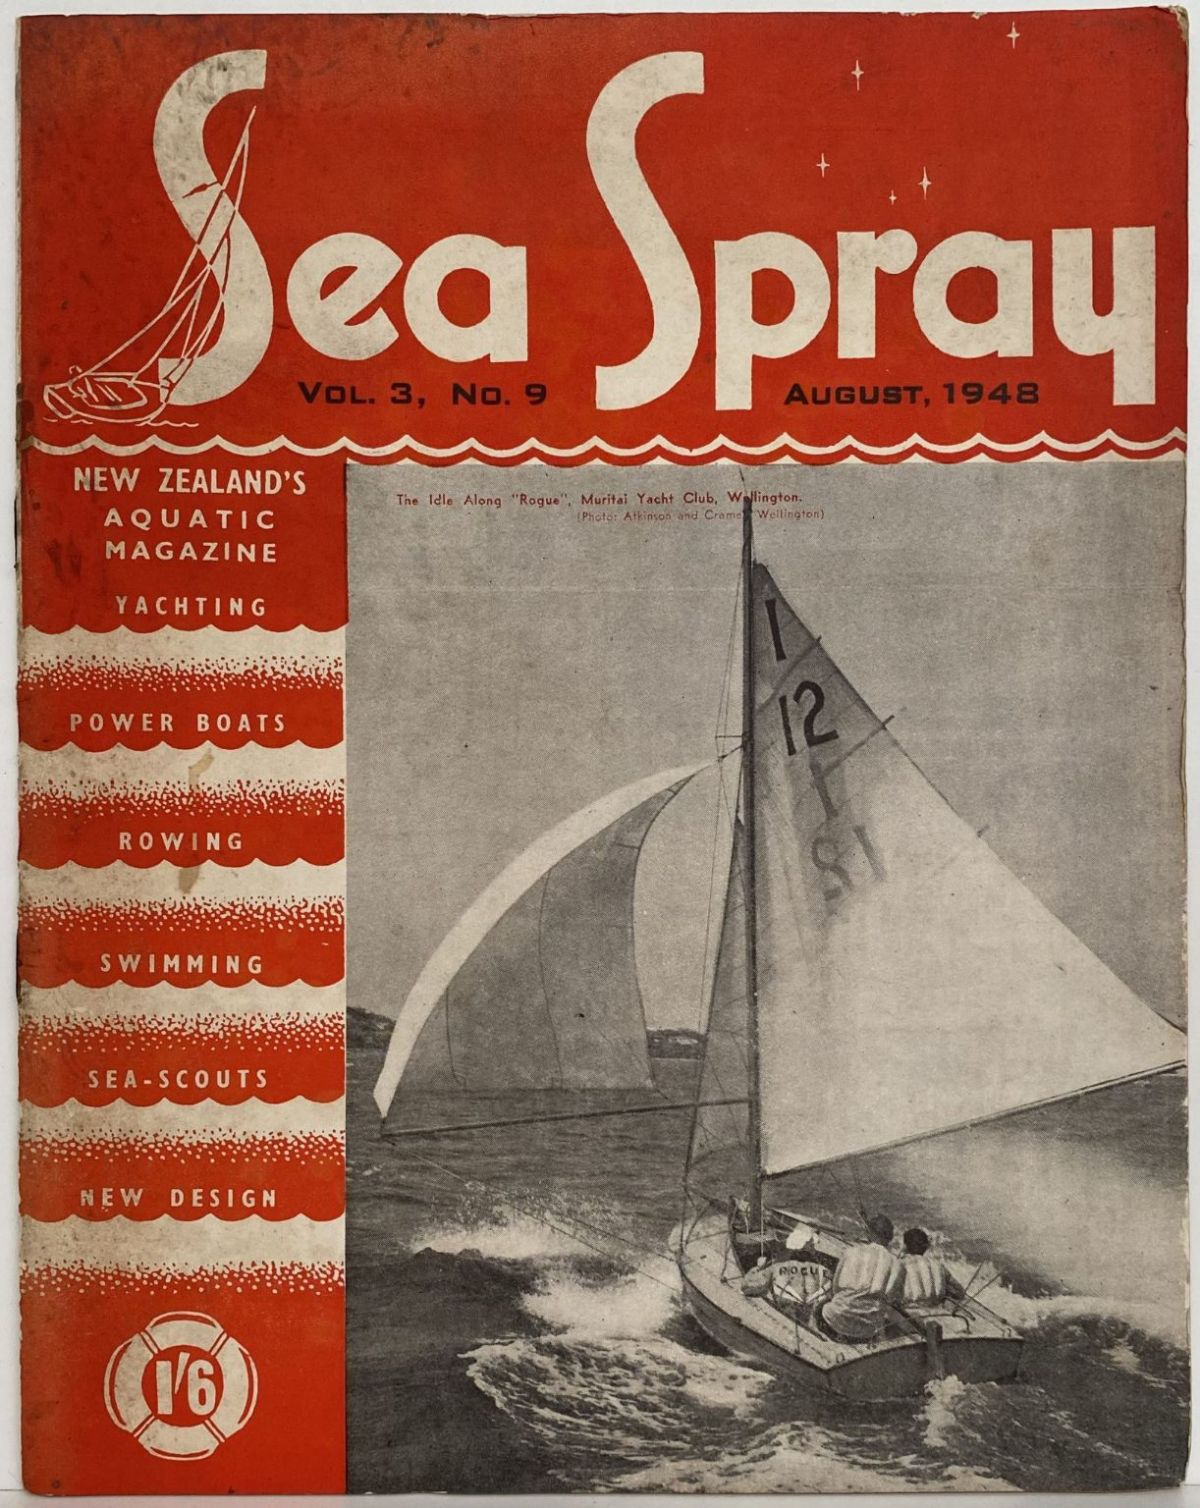 VINTAGE MAGAZINE: Sea Spray - Vol. 3, No. 9 - August 1948